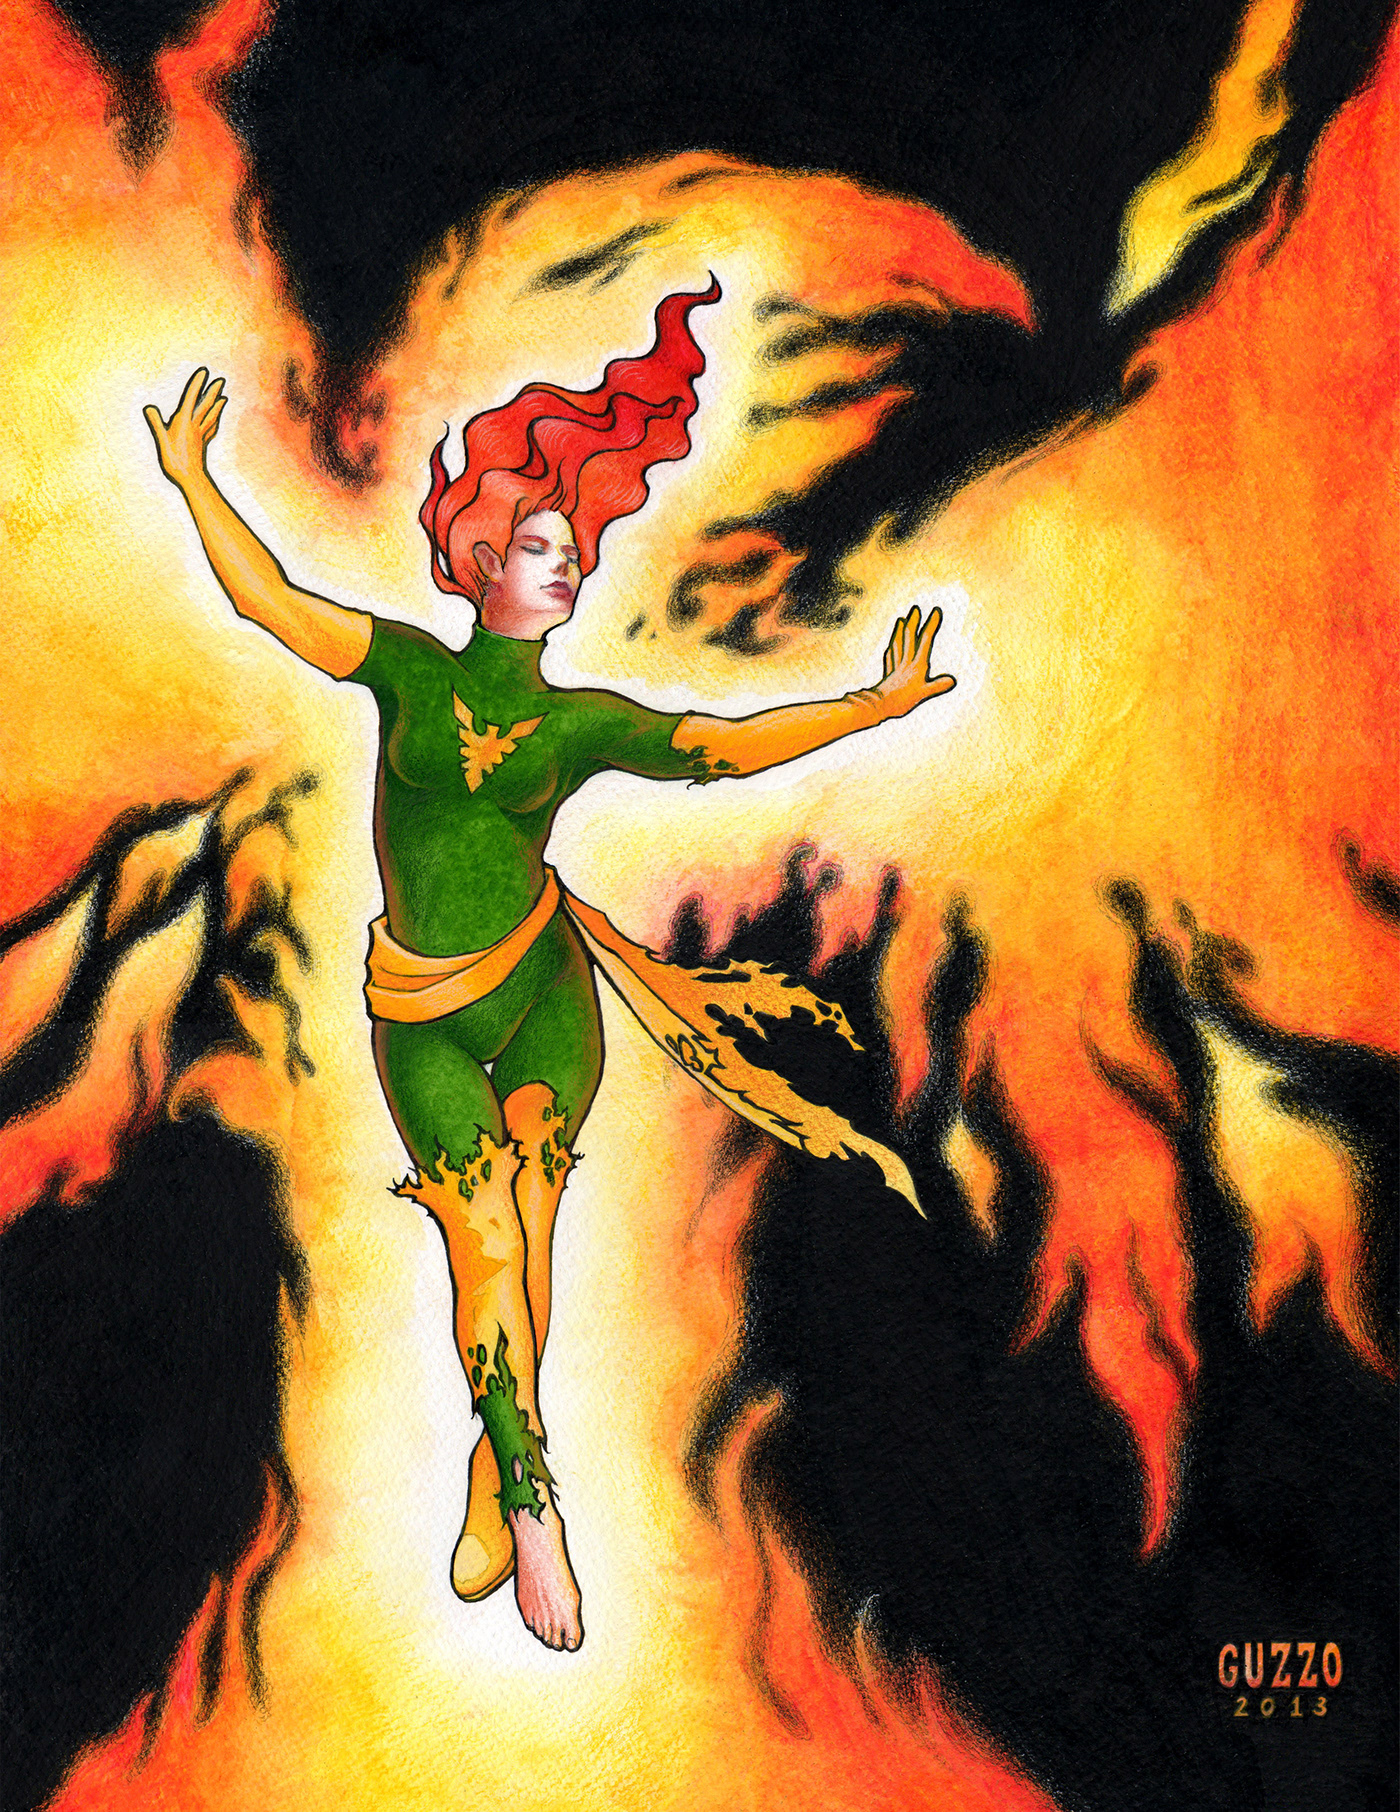 Xmen Phoenix Jean Grey mutant fire firebird Comic Book comics marvel SuperHero